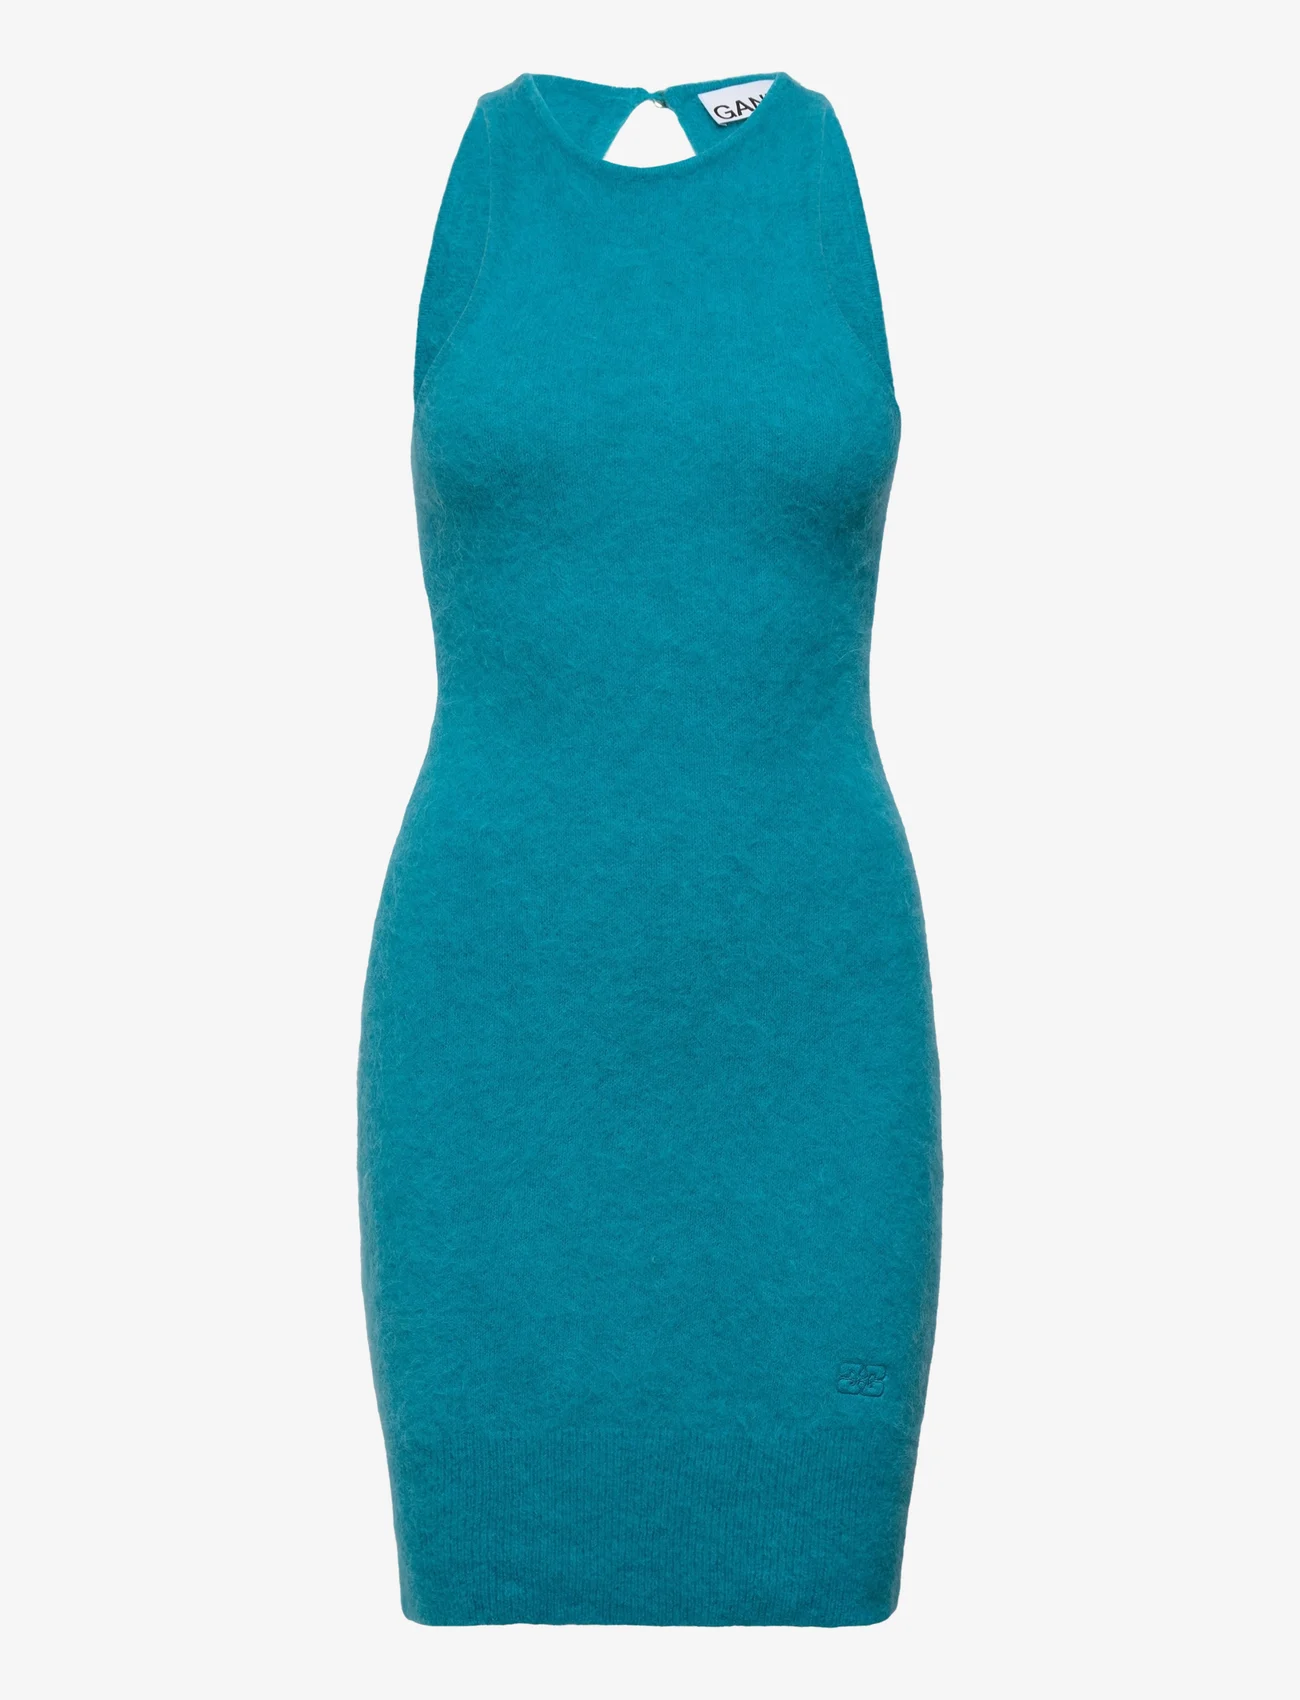 Ganni - Brushed Alpaca - sukienki koszulowe - blue curacao - 0